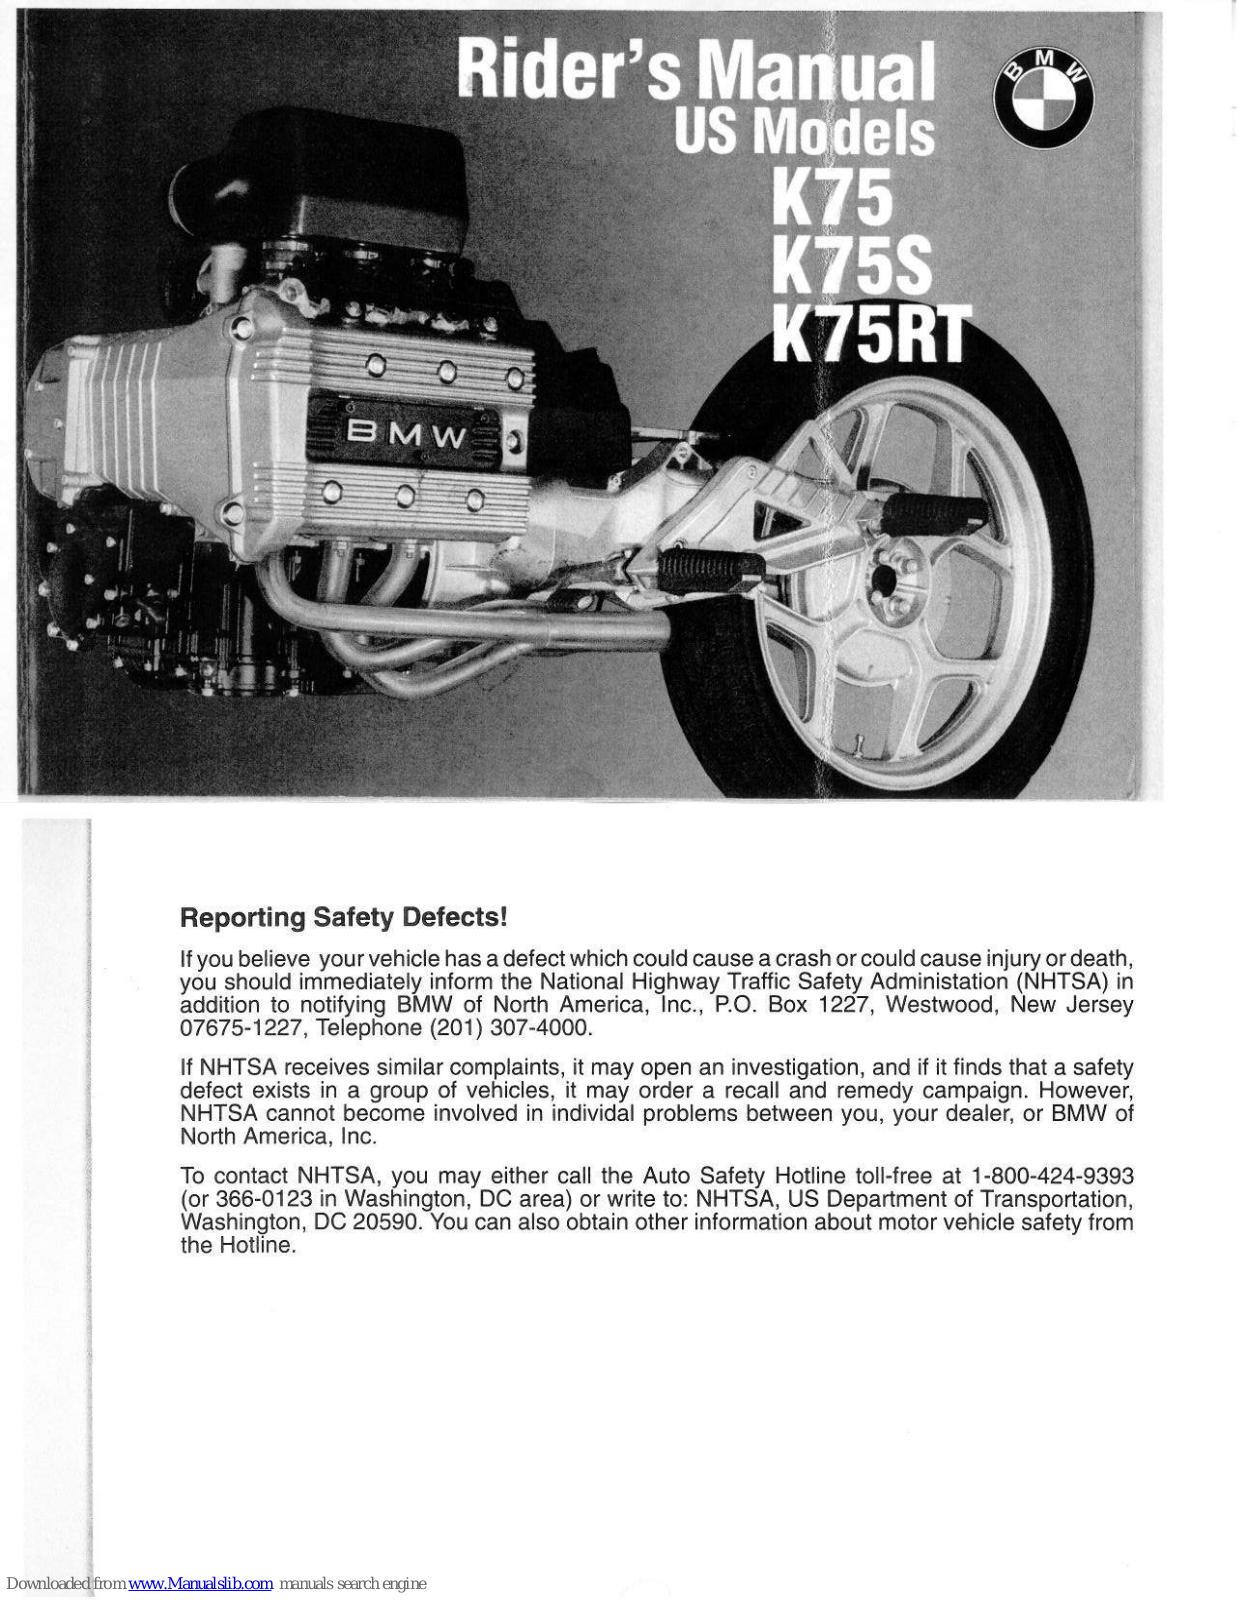 BMW K75, K75S, K75RT Rider's Manual